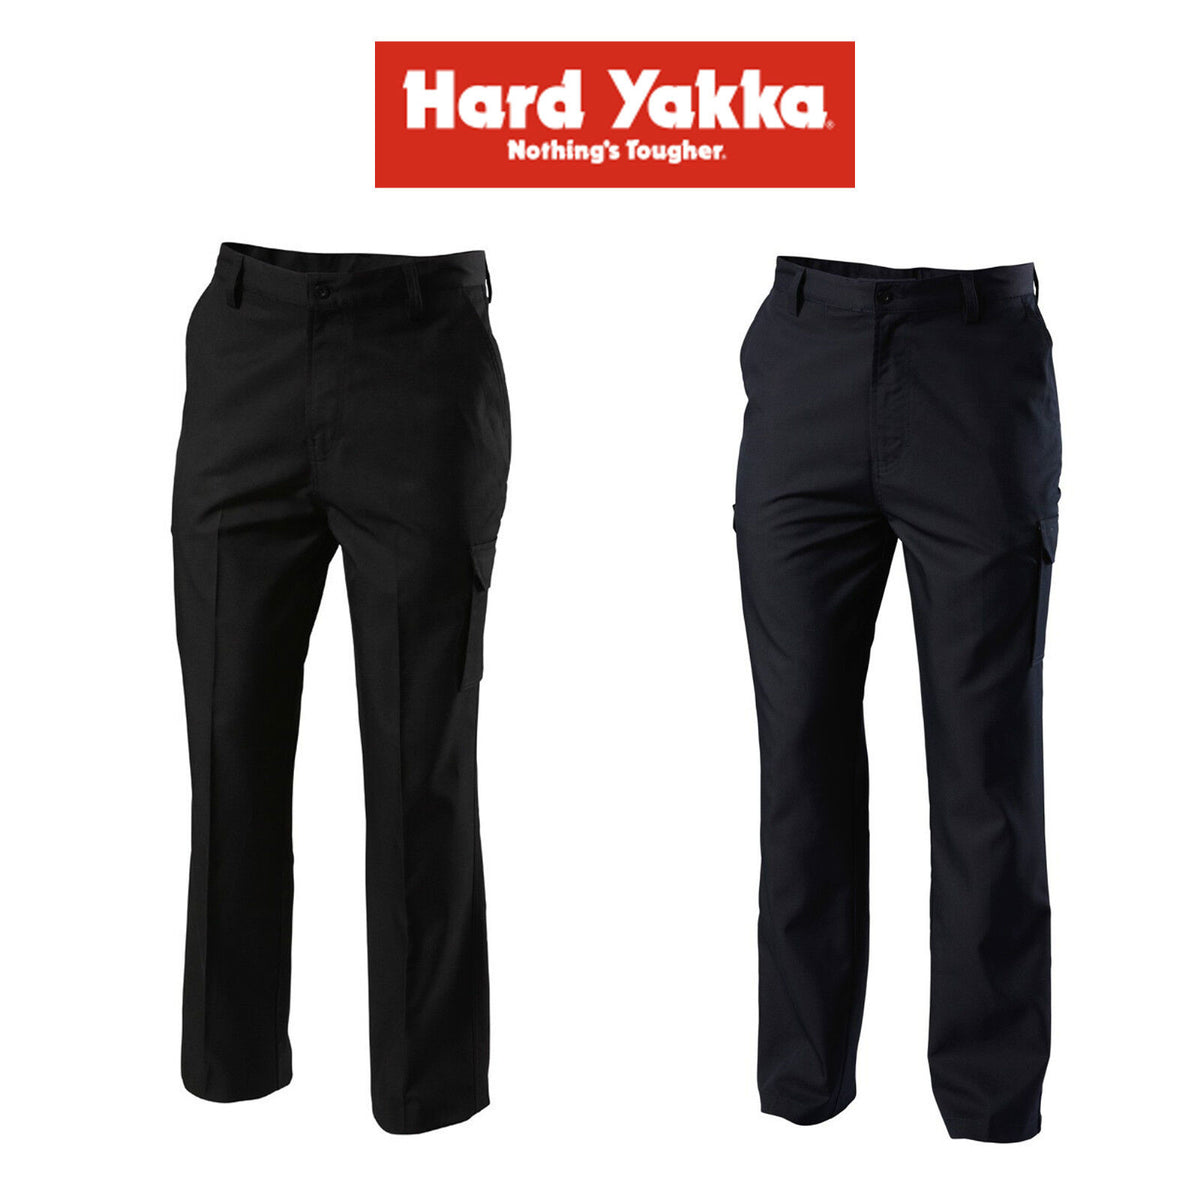 Mens Hard Yakka Cargo Workwear Pants Black Midnight Blue Safety Y02590